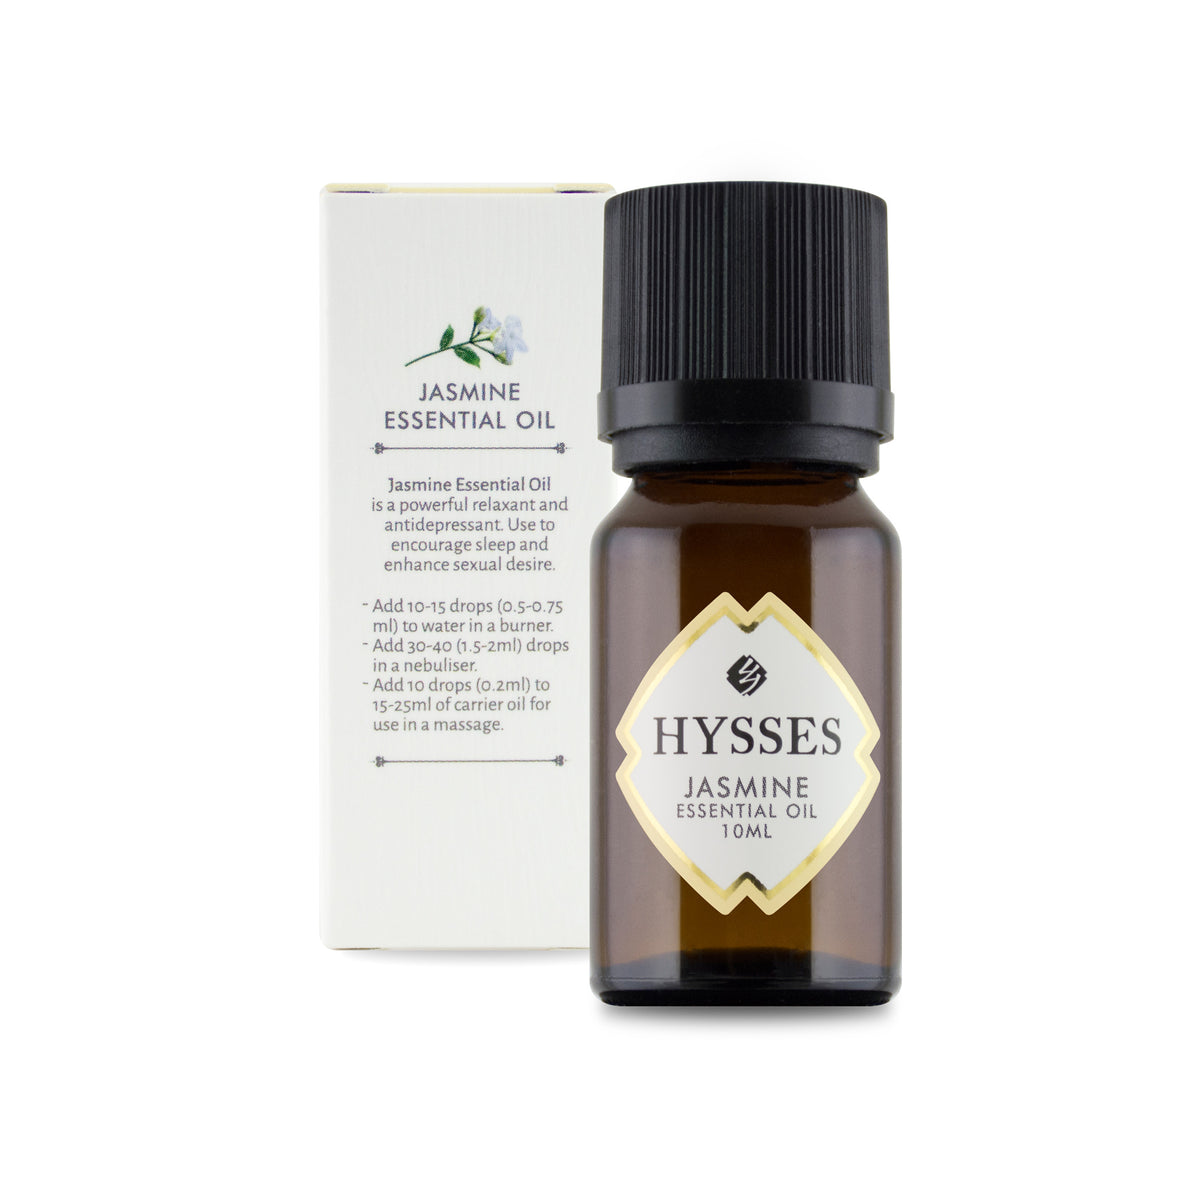 Essential Oil Jasmine (10% in Jojoba Oil) - HYSSES